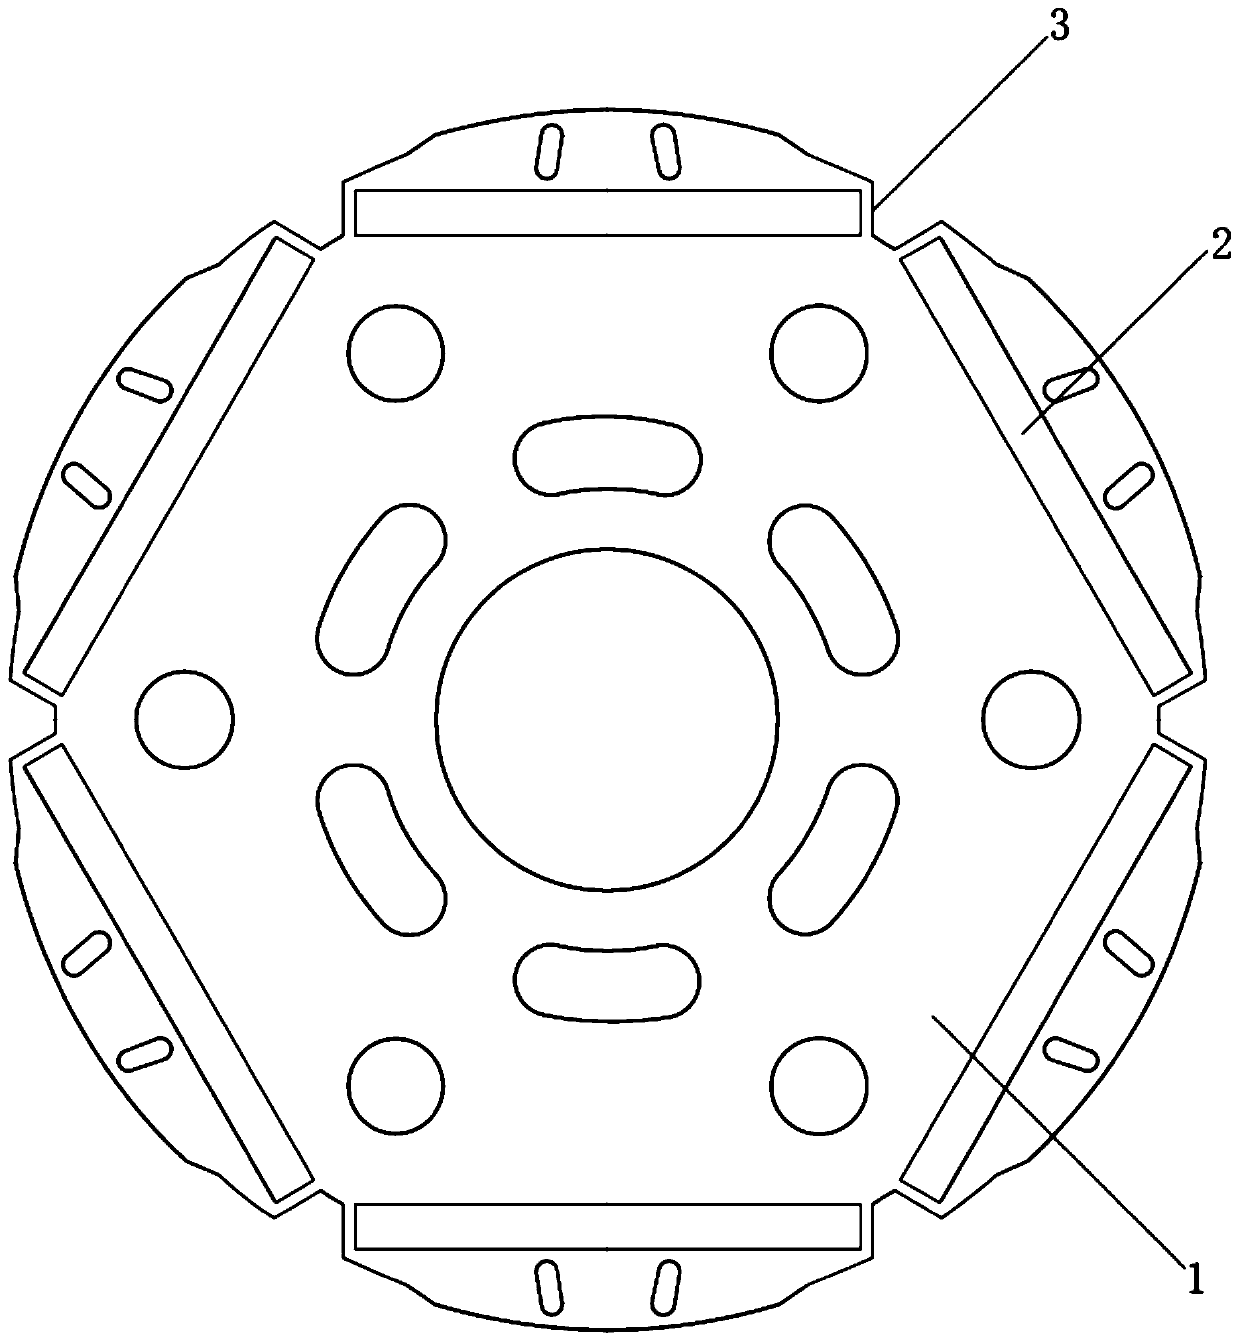 Rotor, motor and compressor